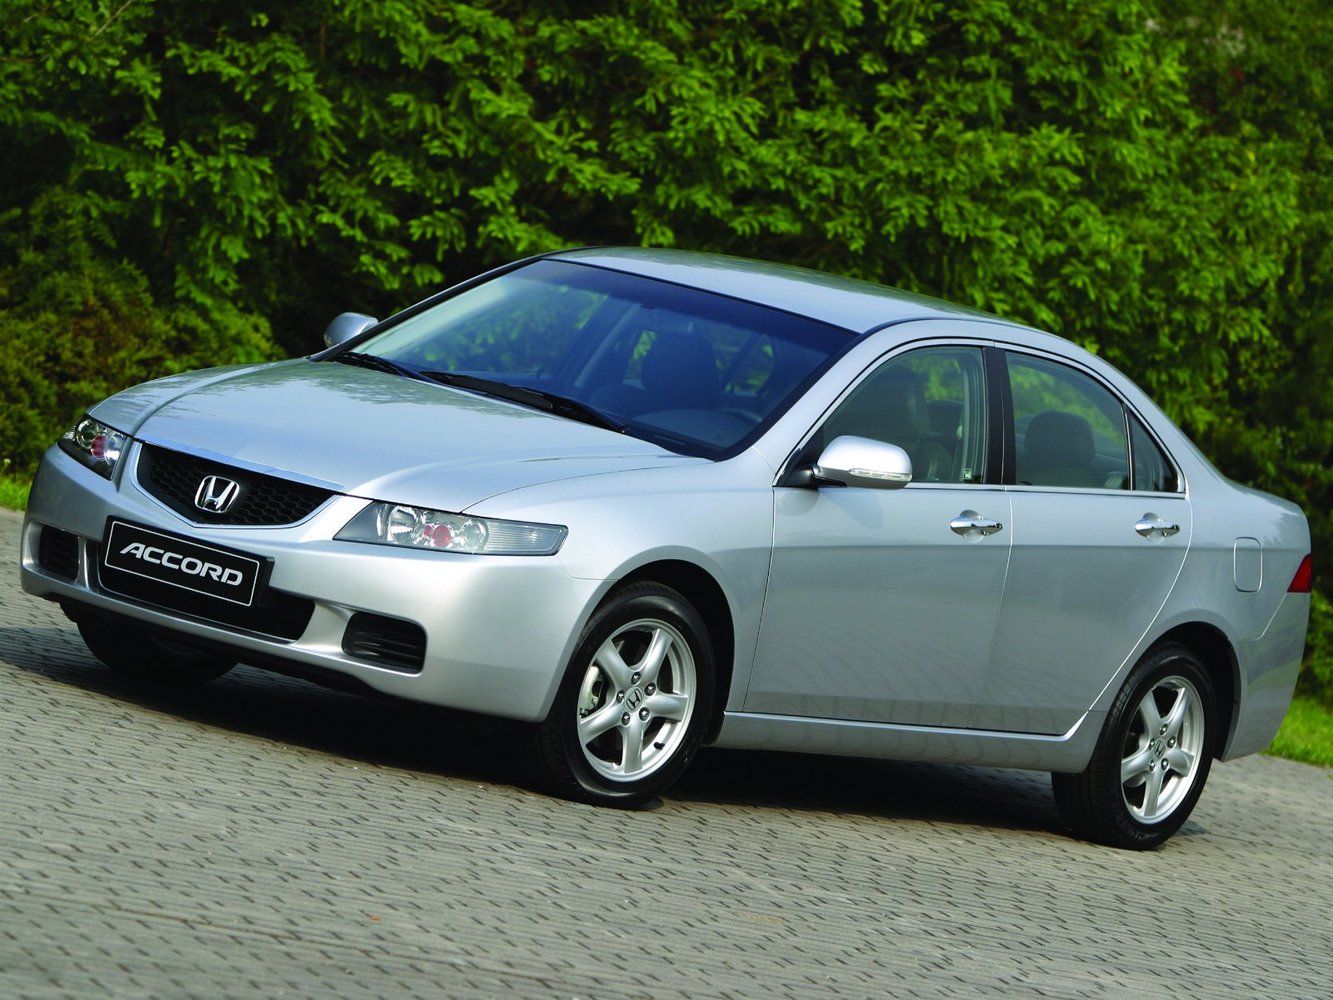 Honda Accord 2002 - 2005